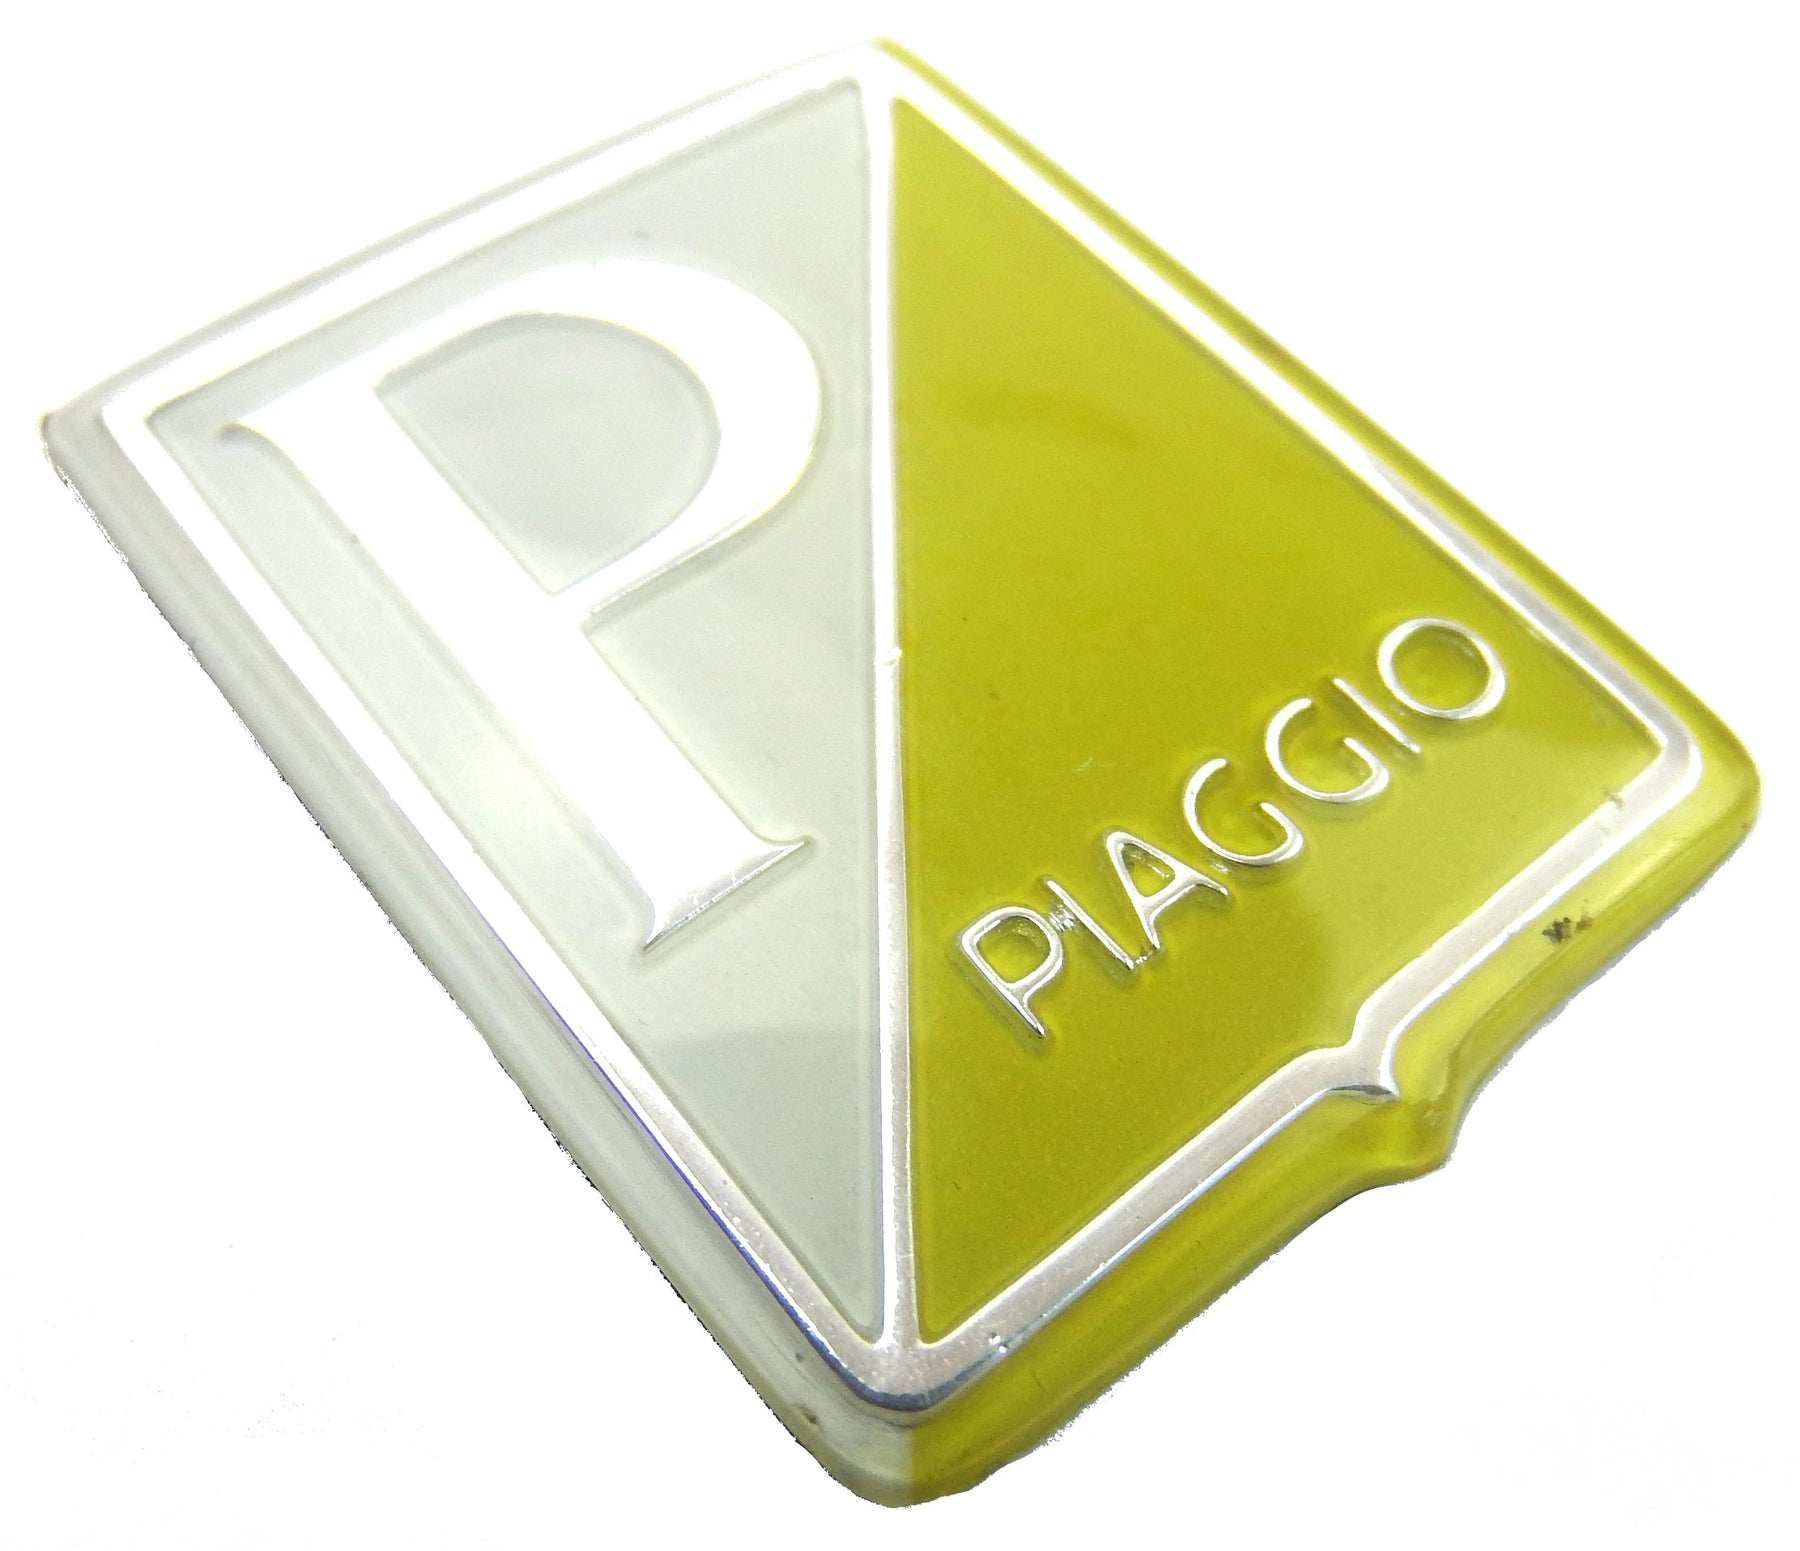 Badge - Horncover - Piaggio Shield - White/Yellow/Silver